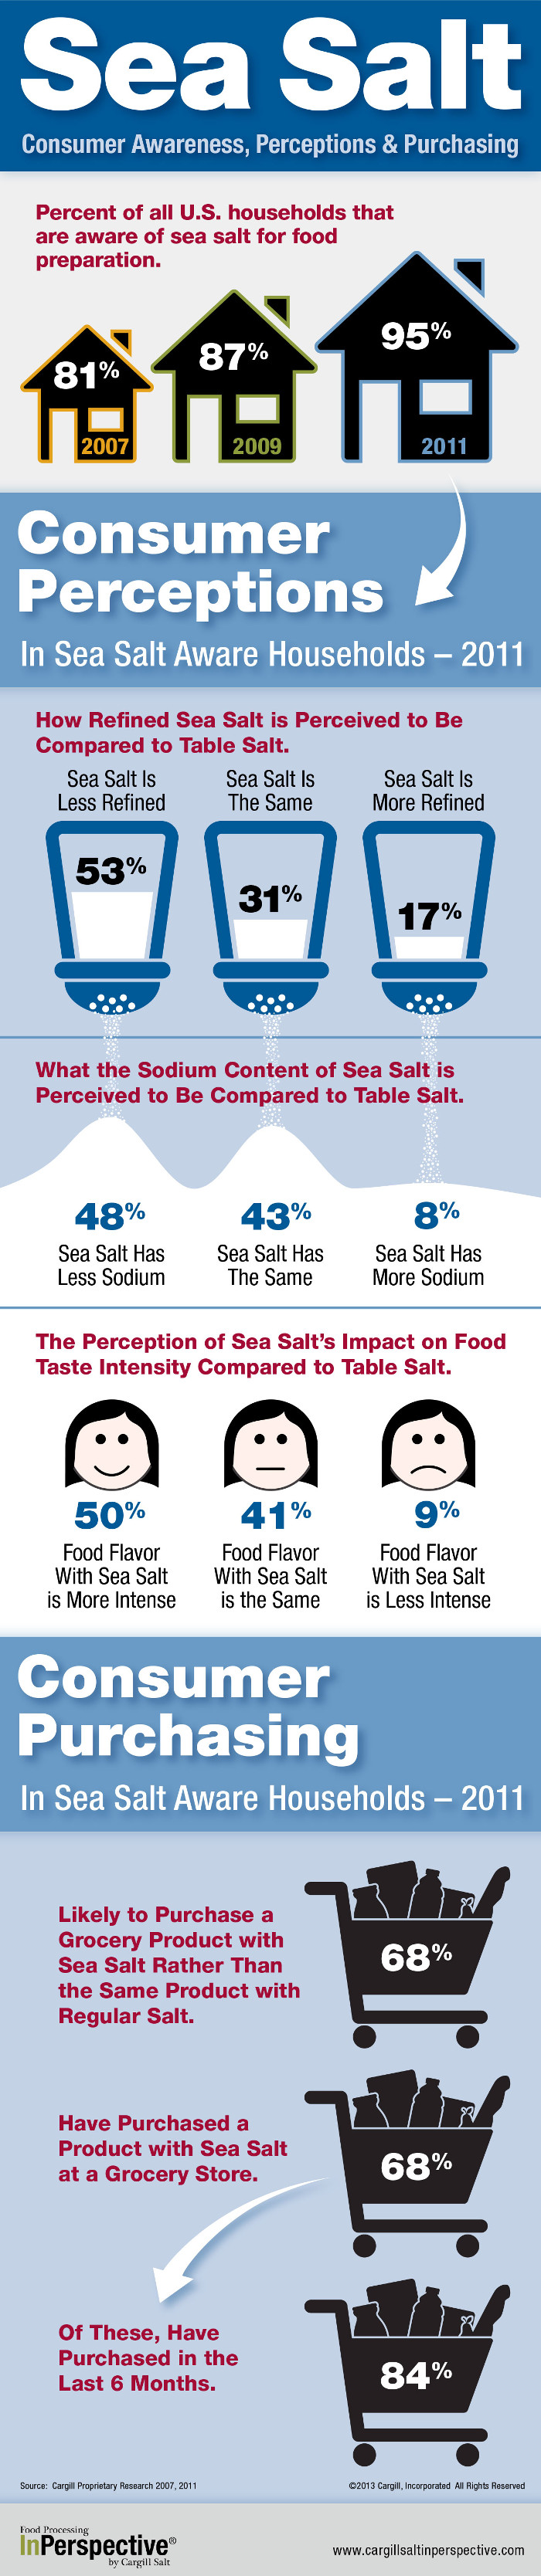 Sea Salt Perceptions